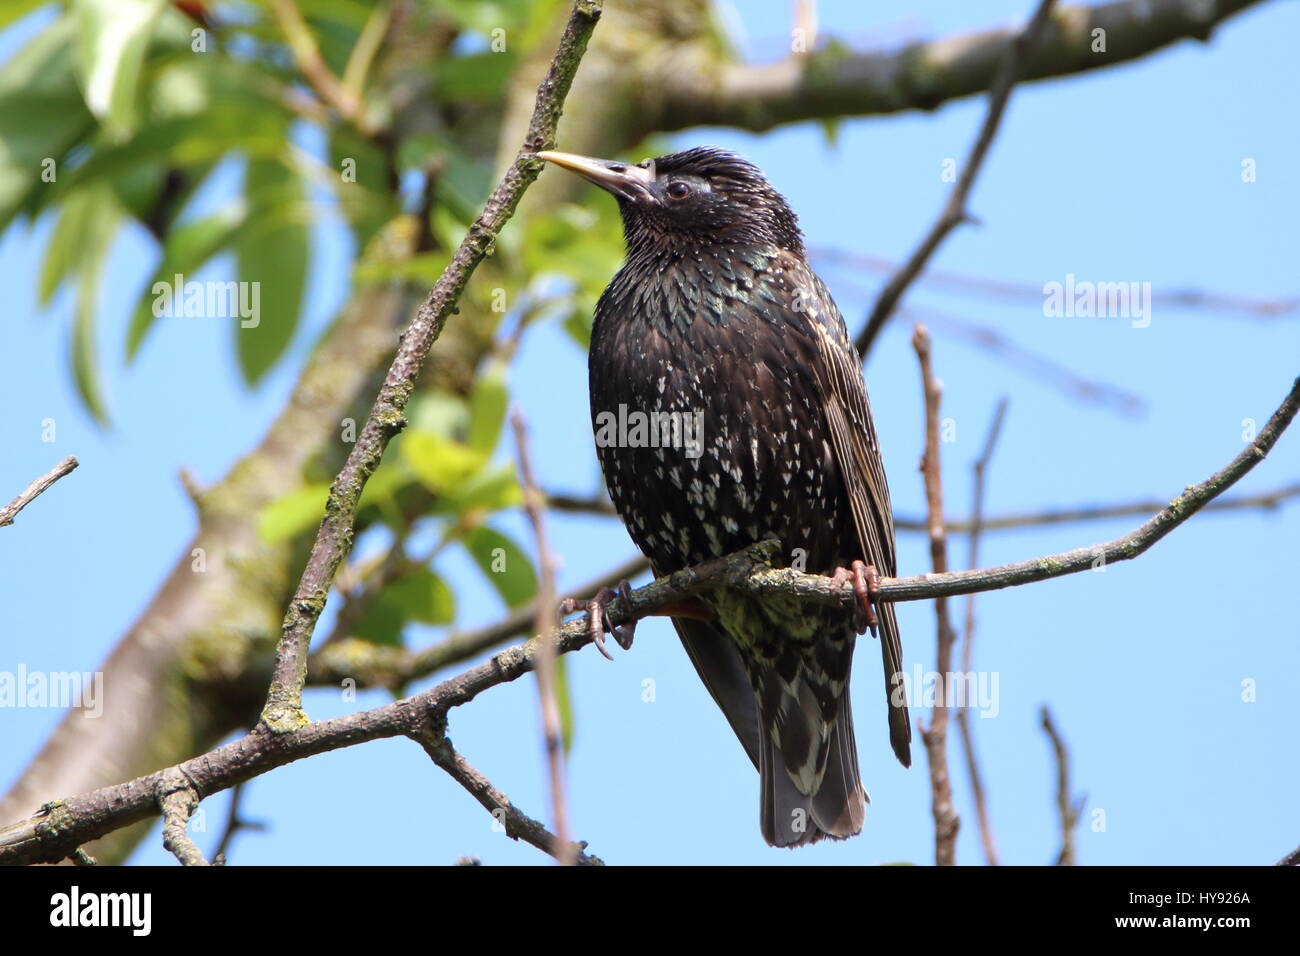 The Rod Stewart hairstyle of the bird world!  Starling, Stumus vulgarise, in a garden tree. UK Stock Photo